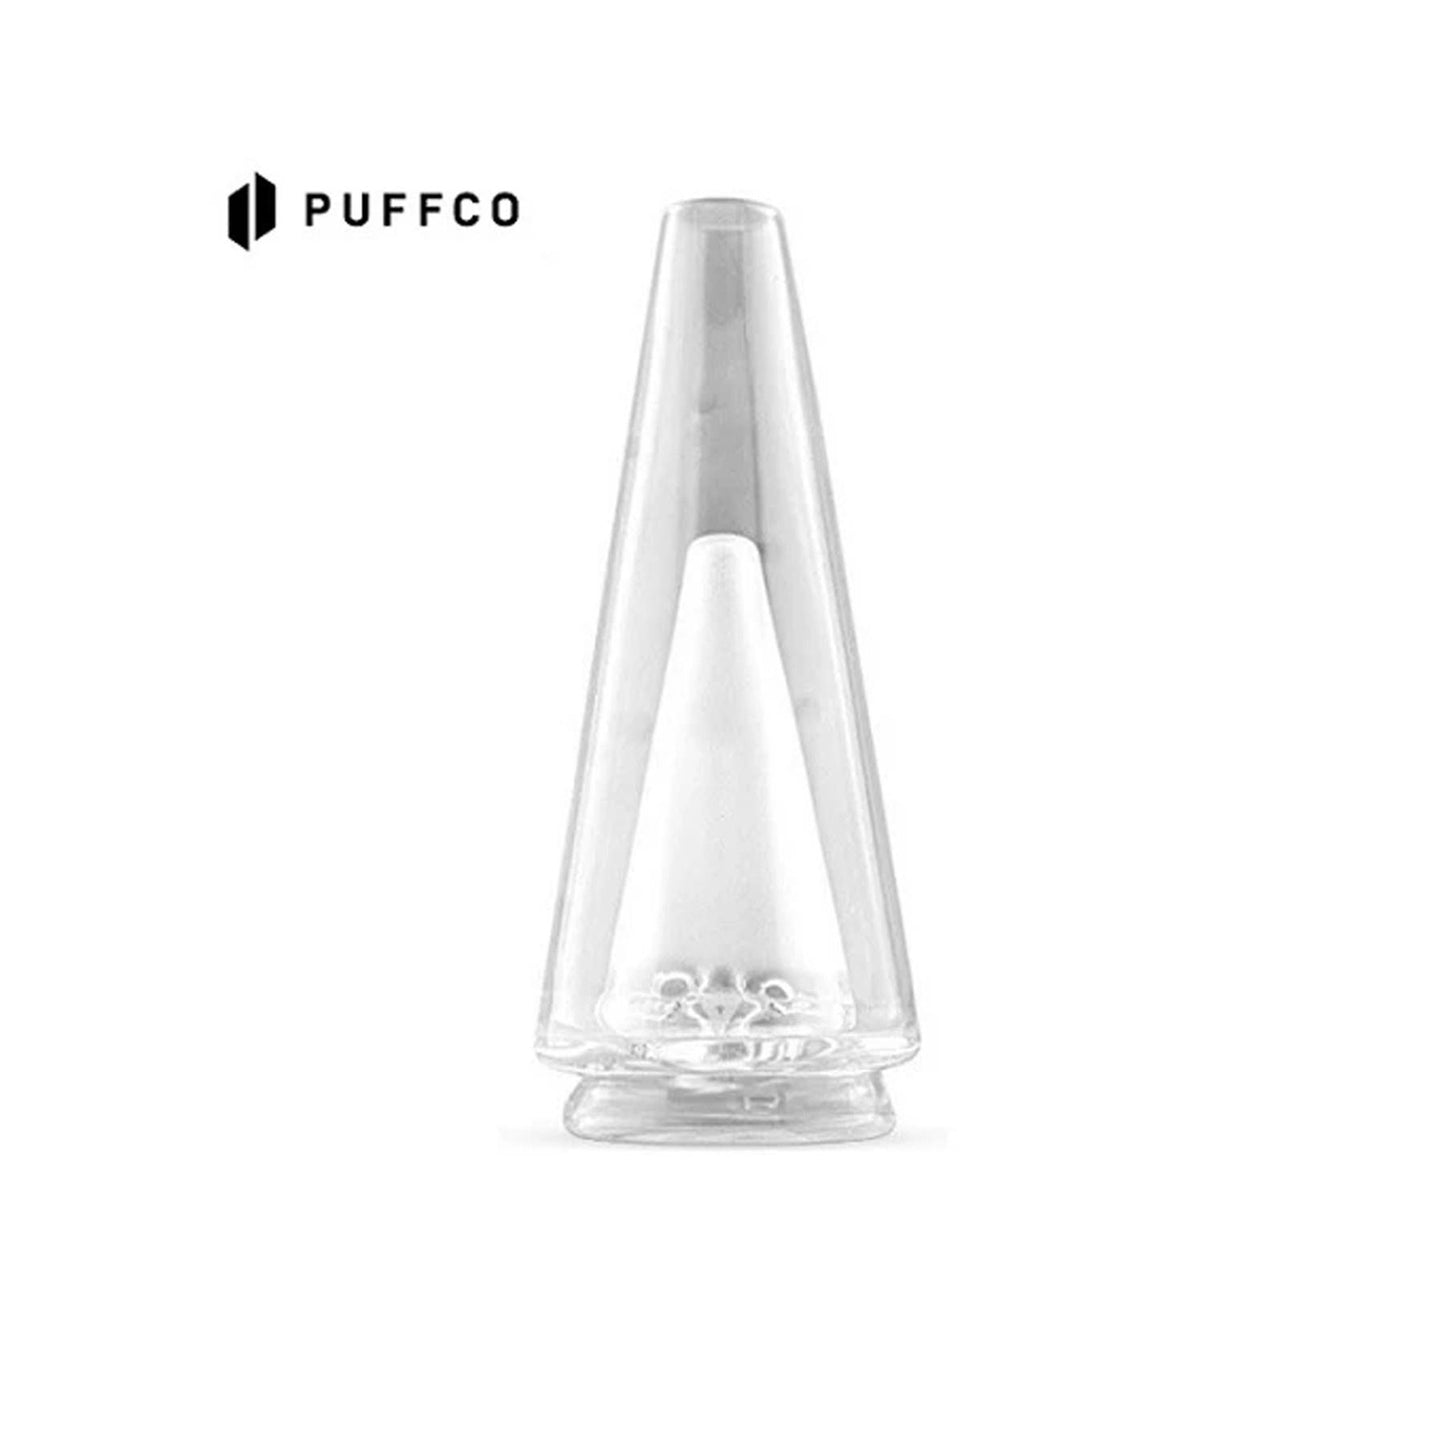 The Puffco Peak Glass